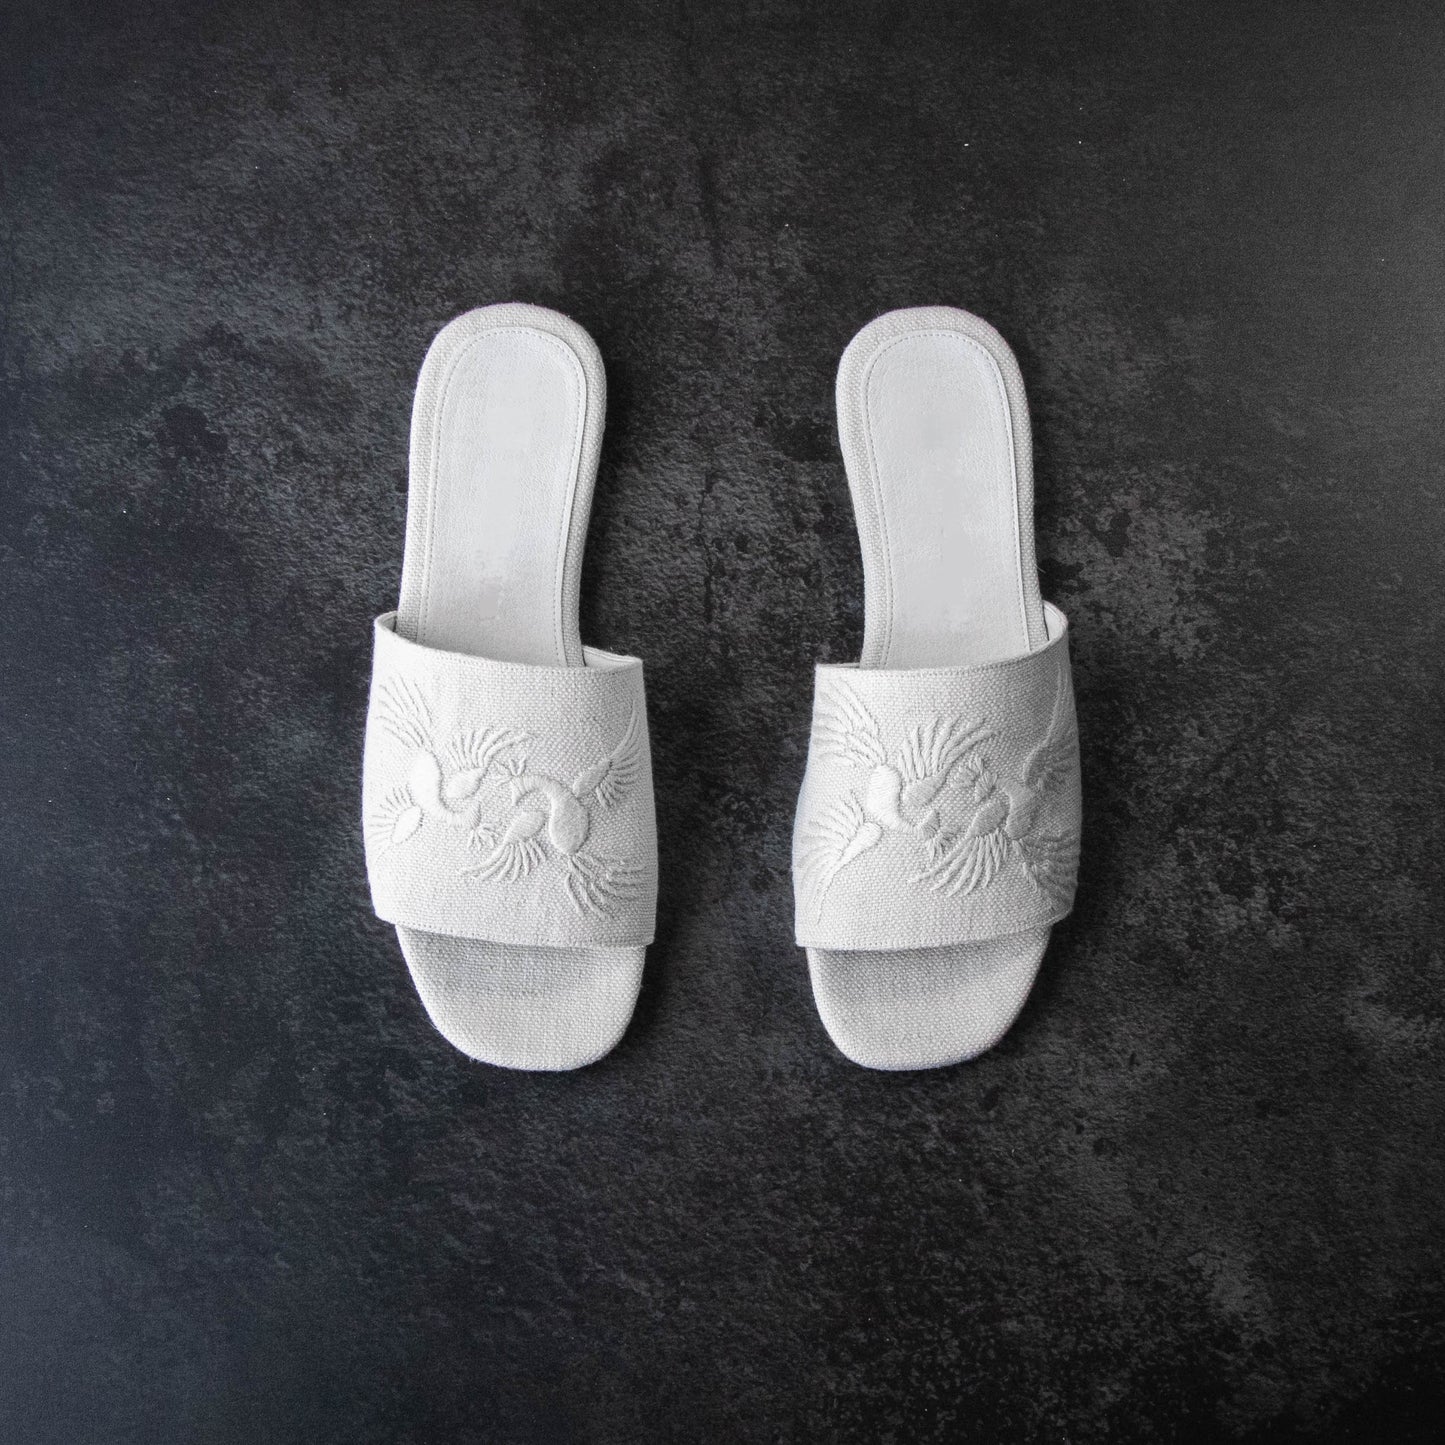 Hand-embroidered Beach Linen Sandals "ALEBRIJES", in White - ALLE Handbags